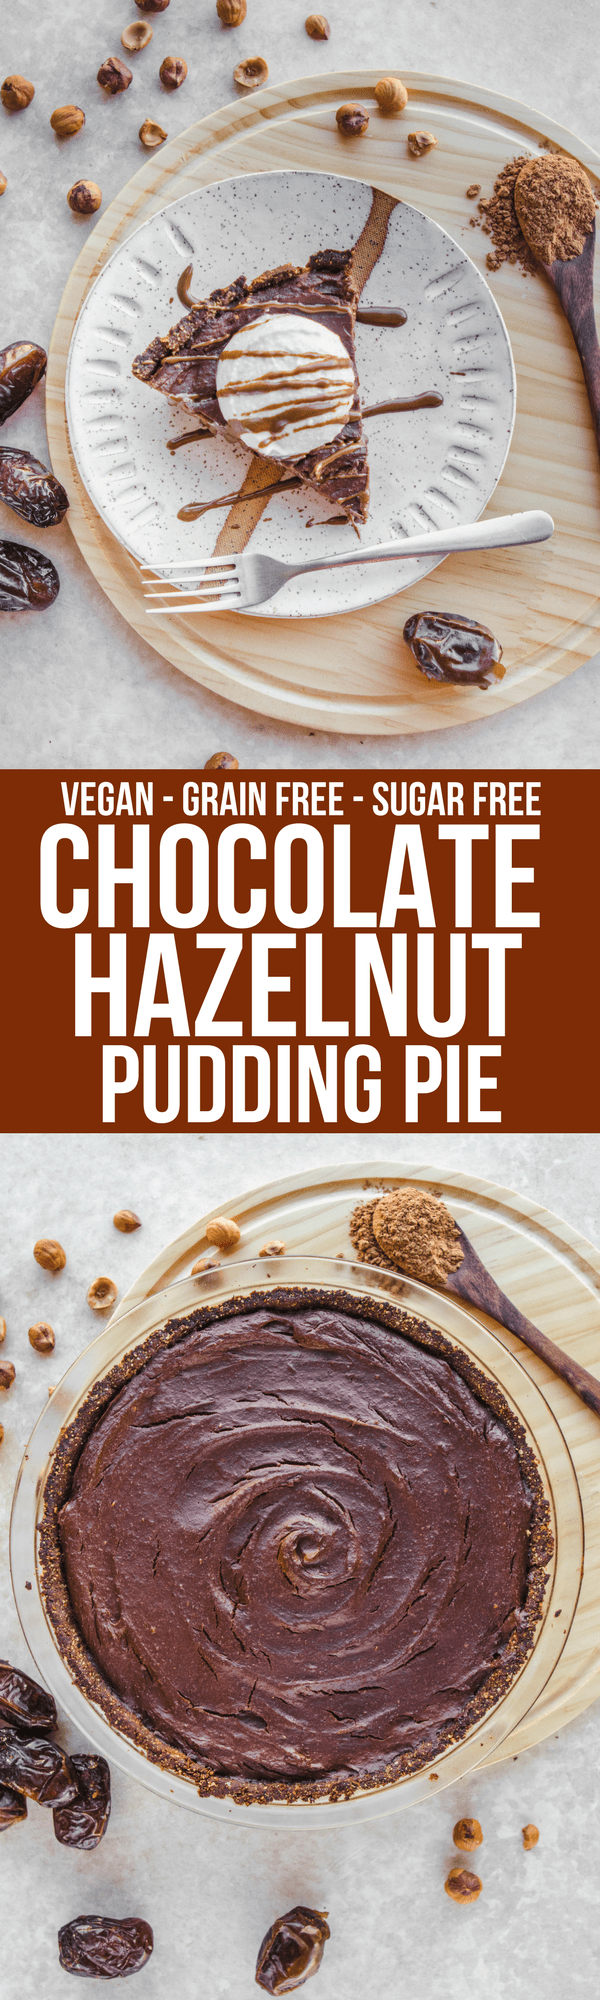 Chocolate Hazelnut Pudding Pie